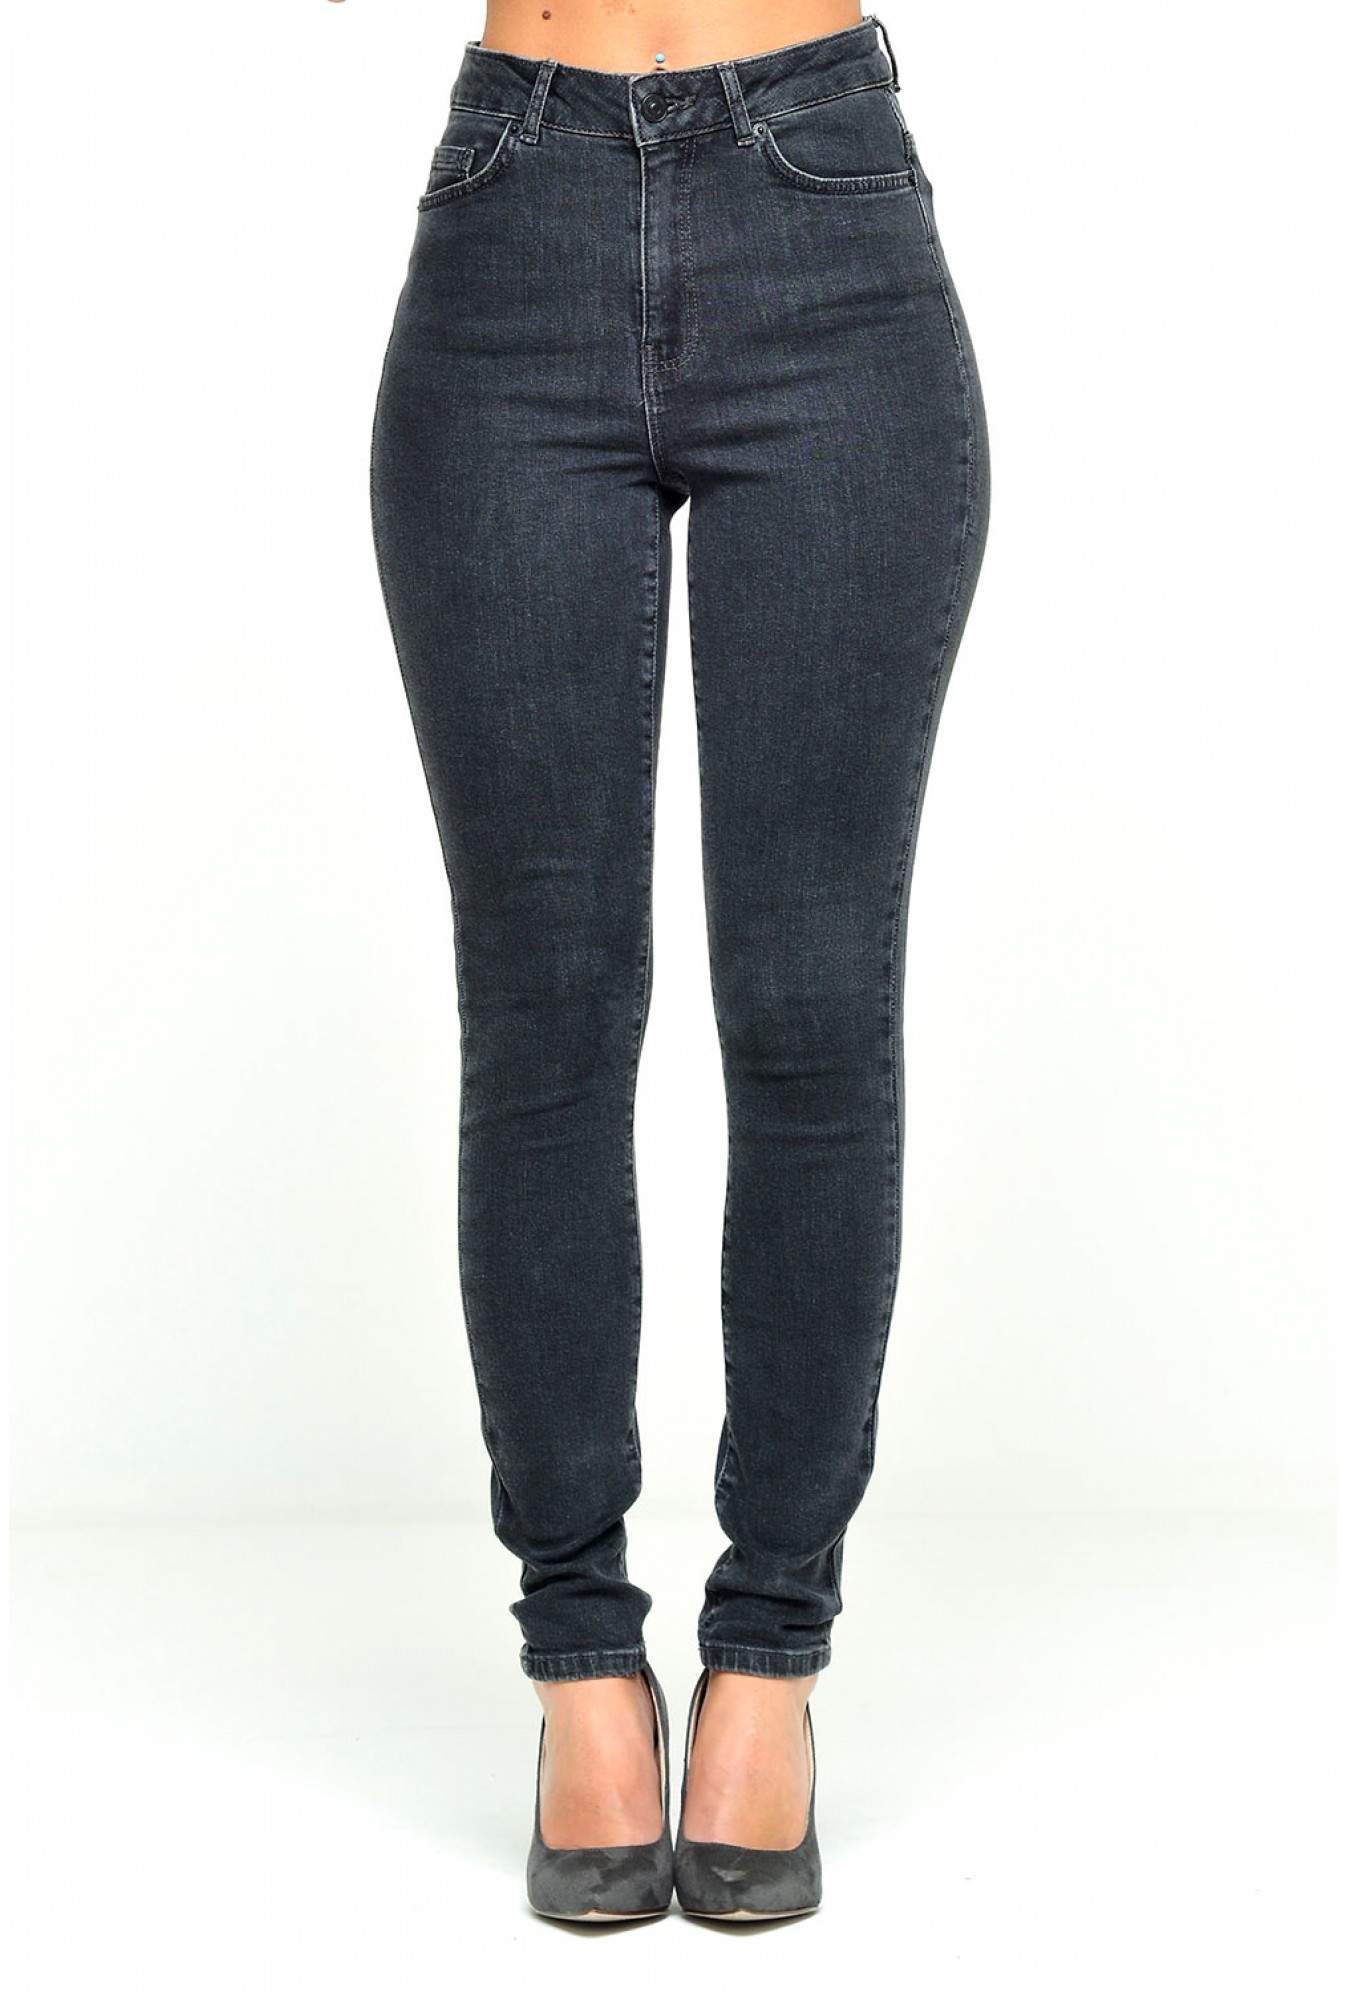 Vero Moda Nine Short Length Denim Jeans in Dark Grey | iCLOTHING